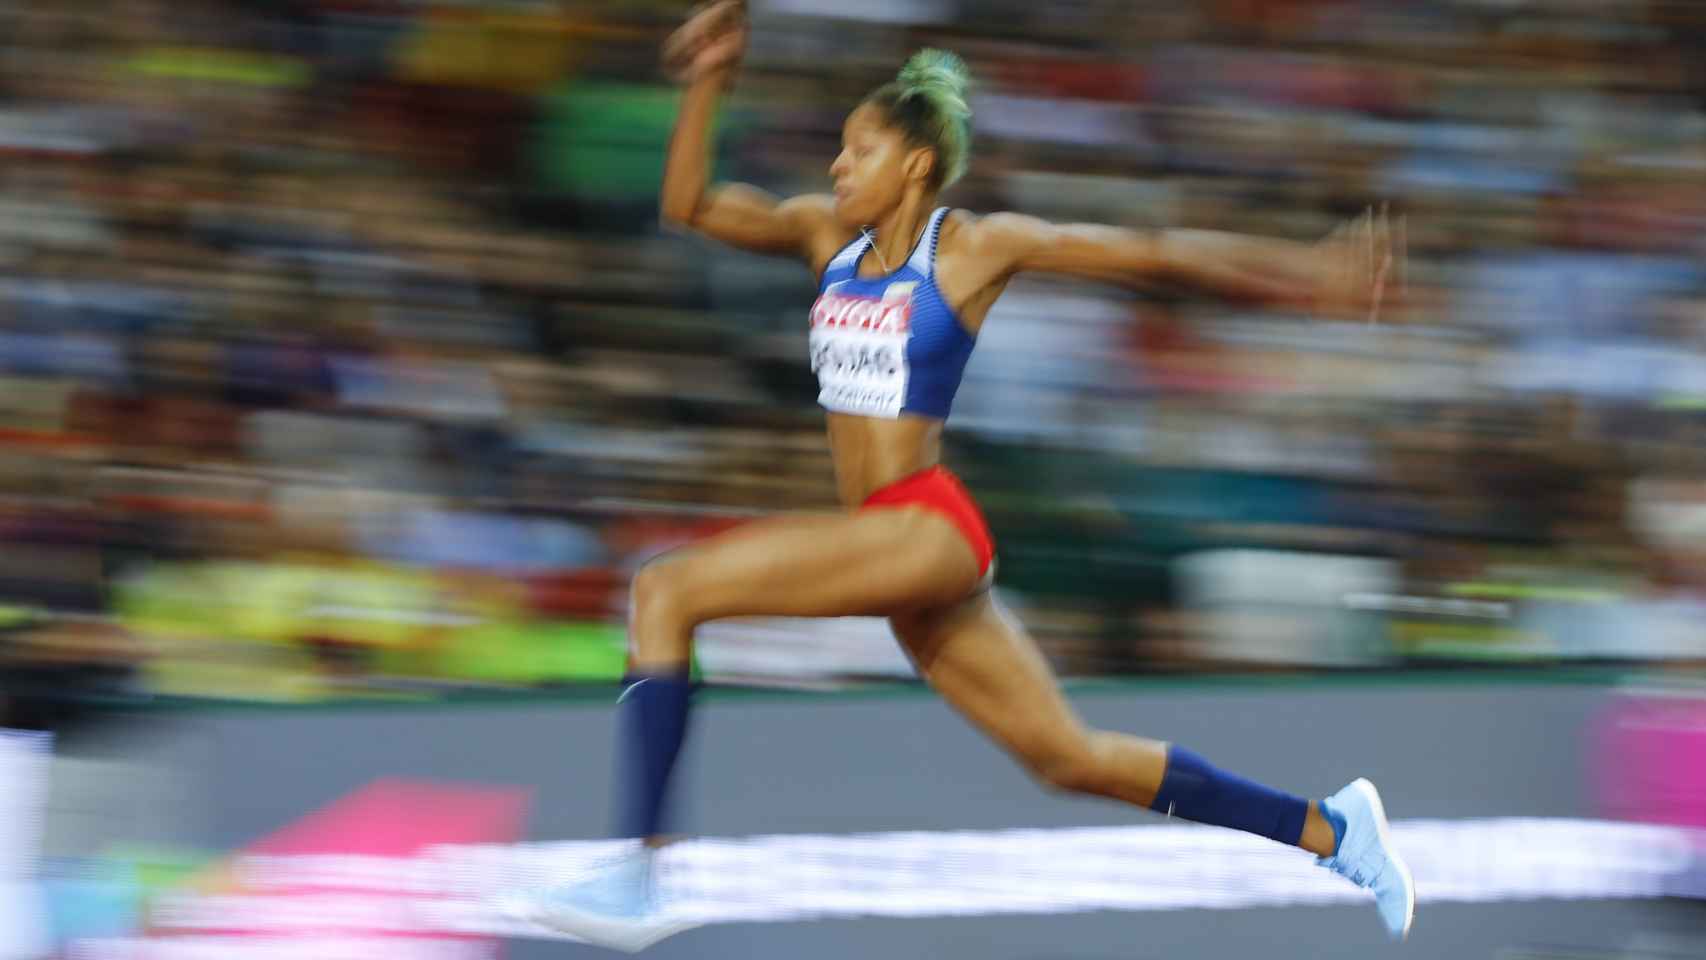 La venezolana ganó la final de triple con un salto de 14.91 metros.